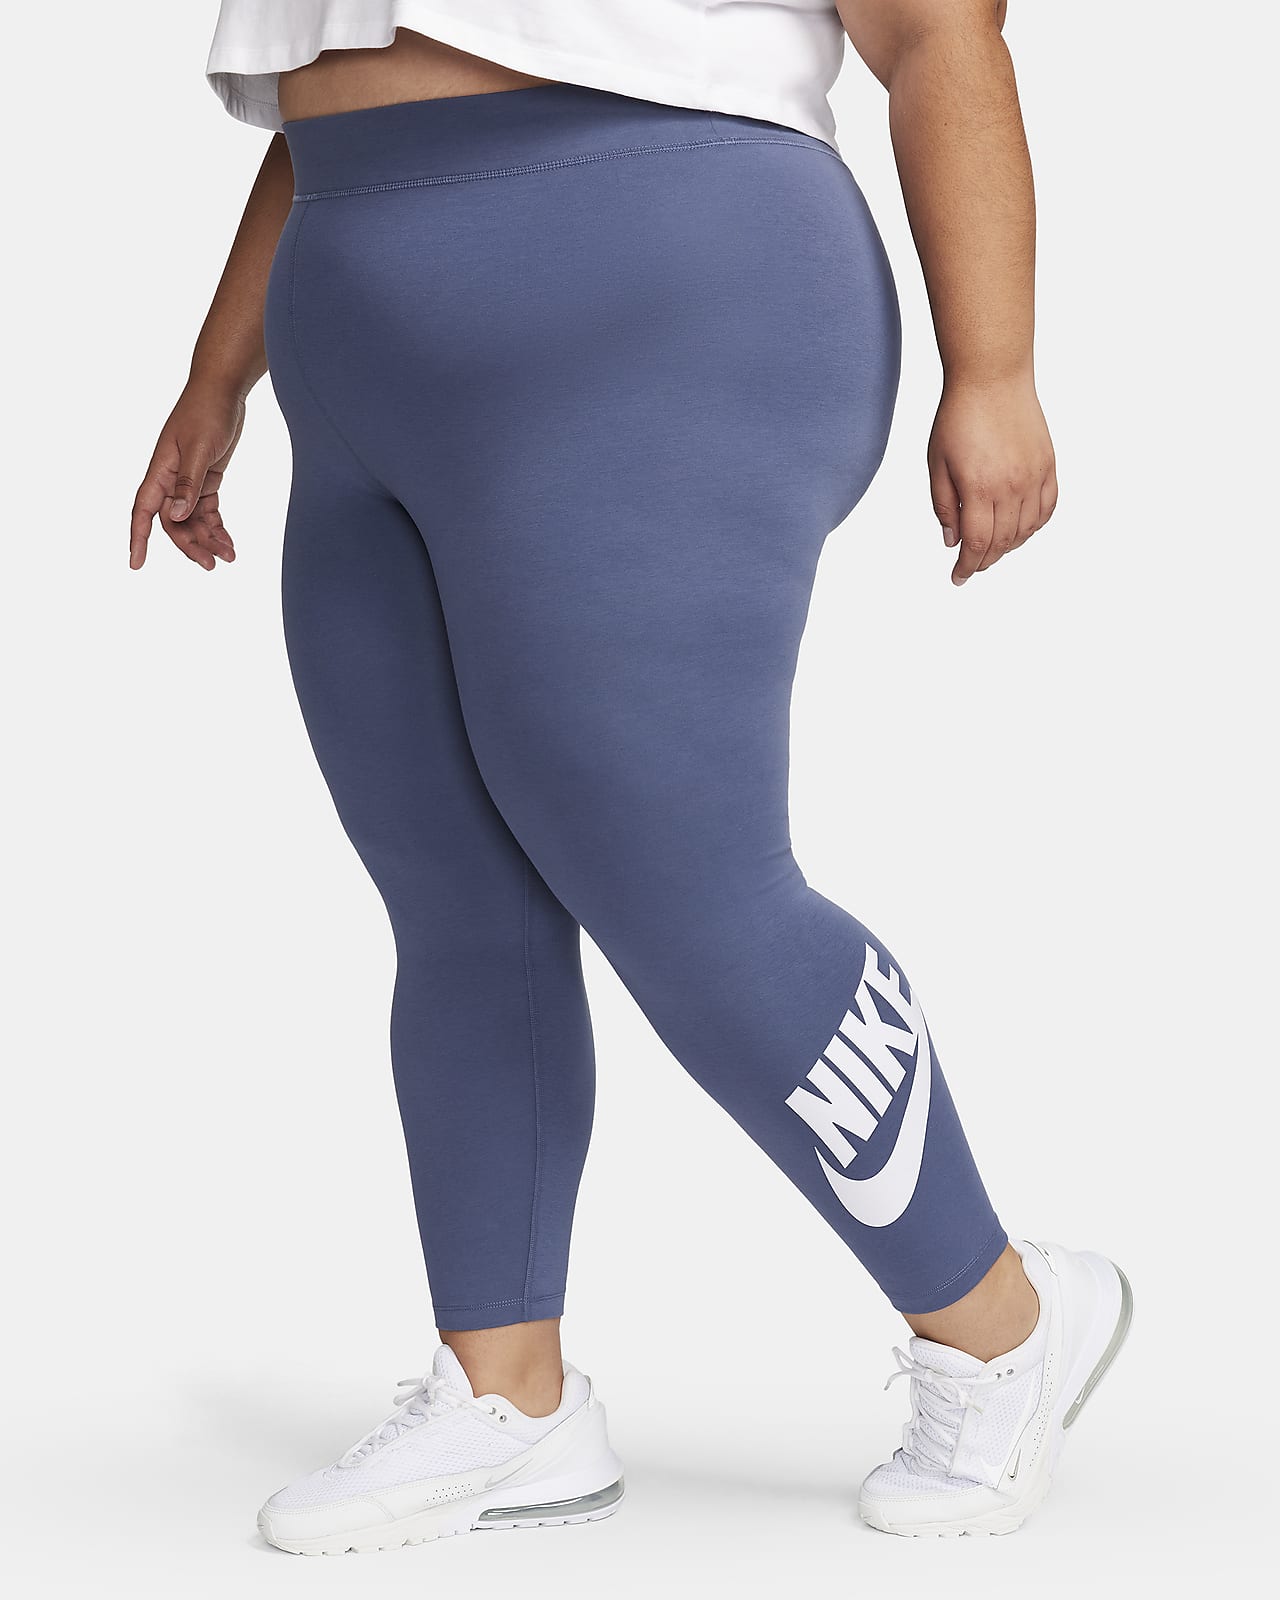 Sportswear Classics Women's High-Waisted Graphic Leggings (Plus Size). Nike.com